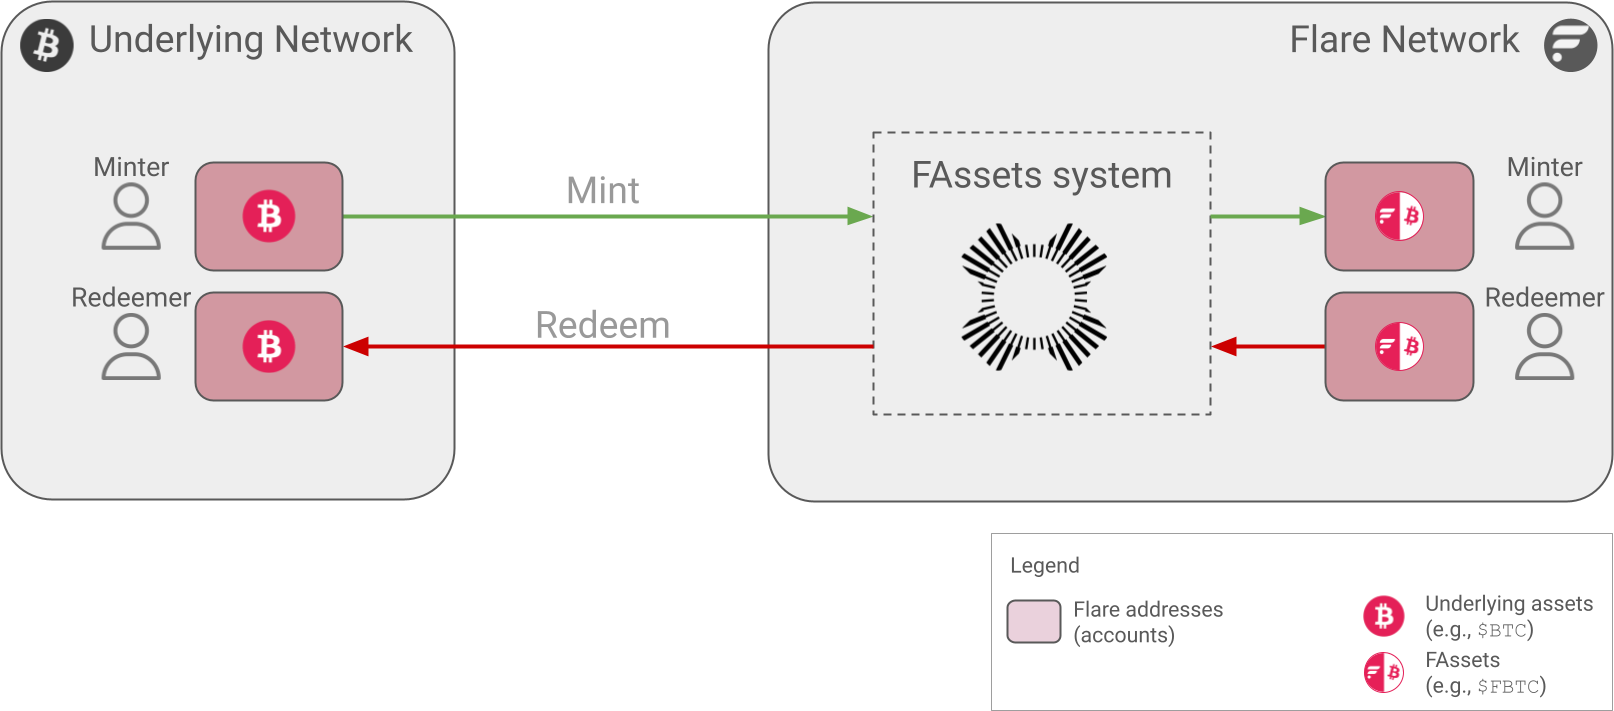 FAssets system